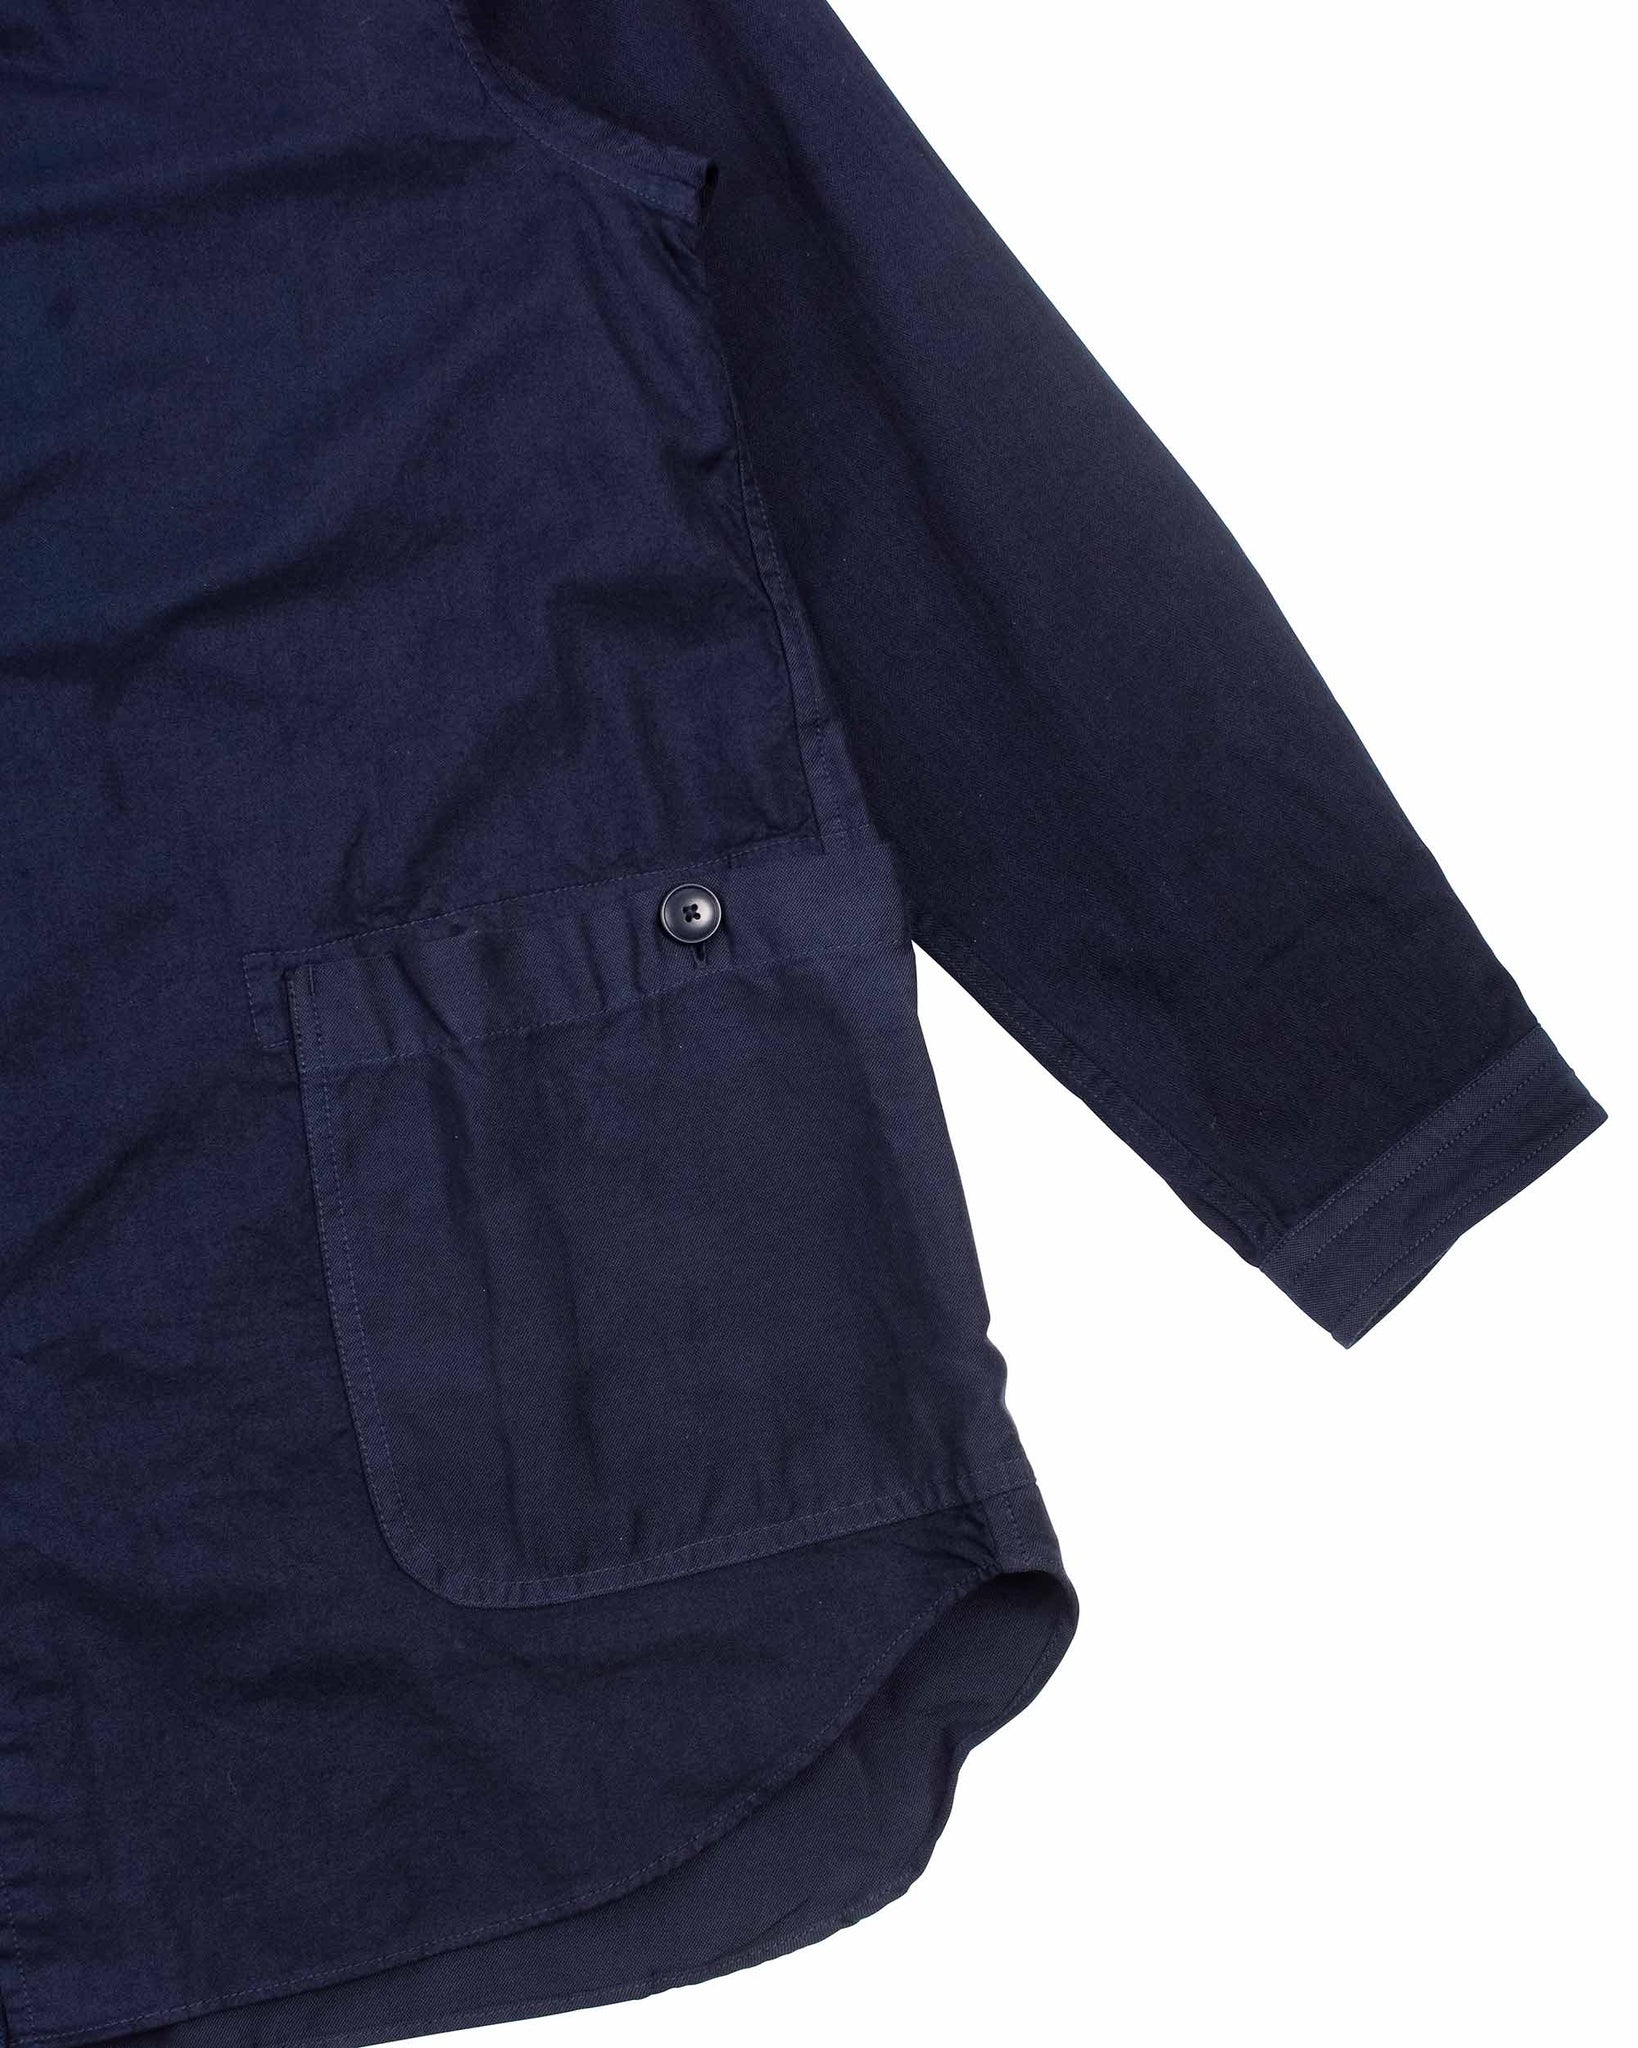 Sage de Cret Shirt Jacket Navy Multi Details